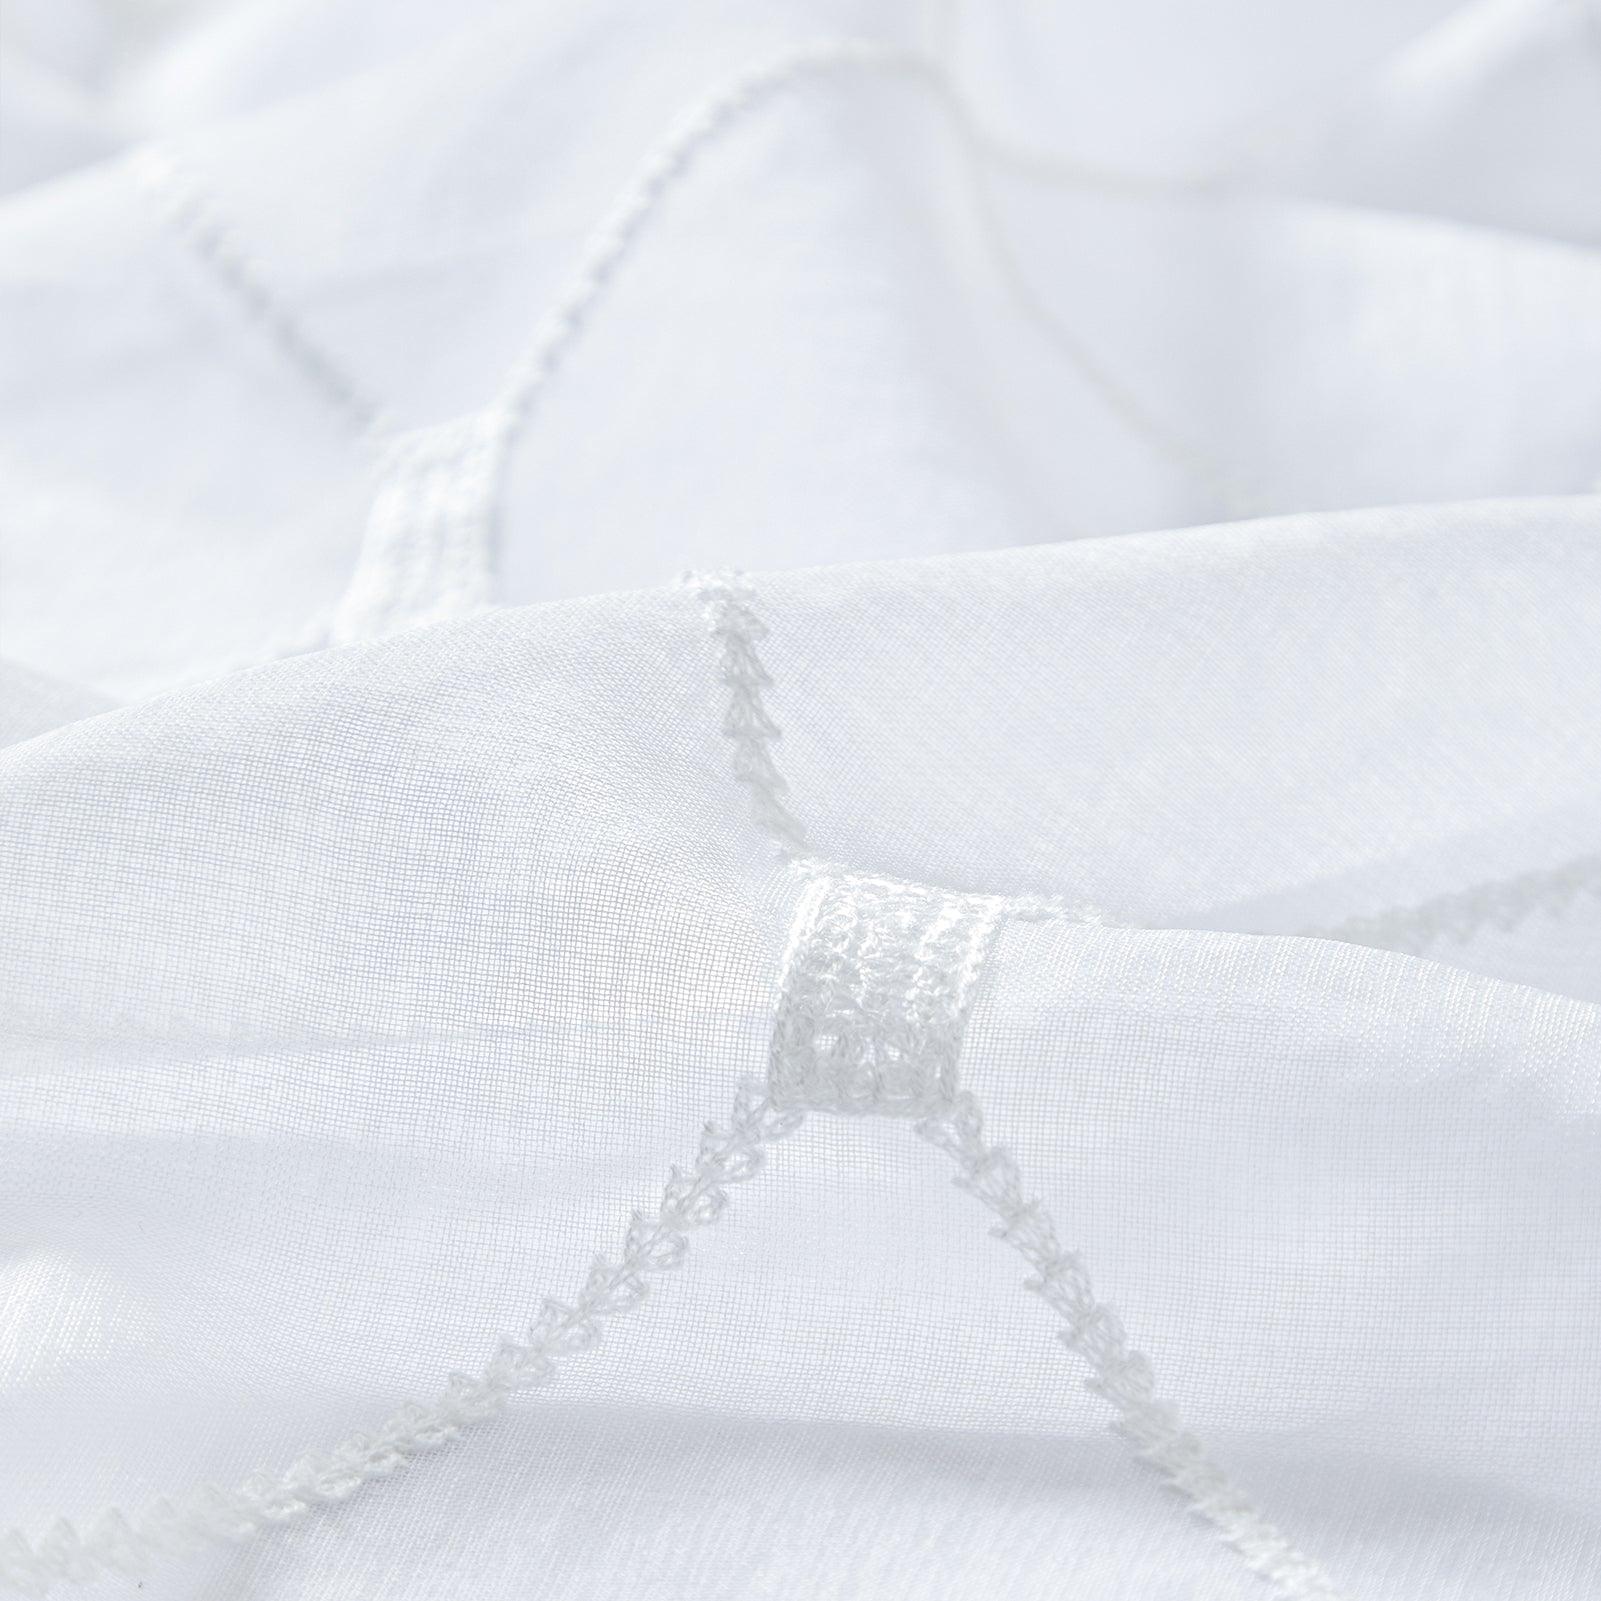 Topfinel Embroidered White Sheer Curtains,Geometric Diamond Curtains For Kitchen - Topfinel